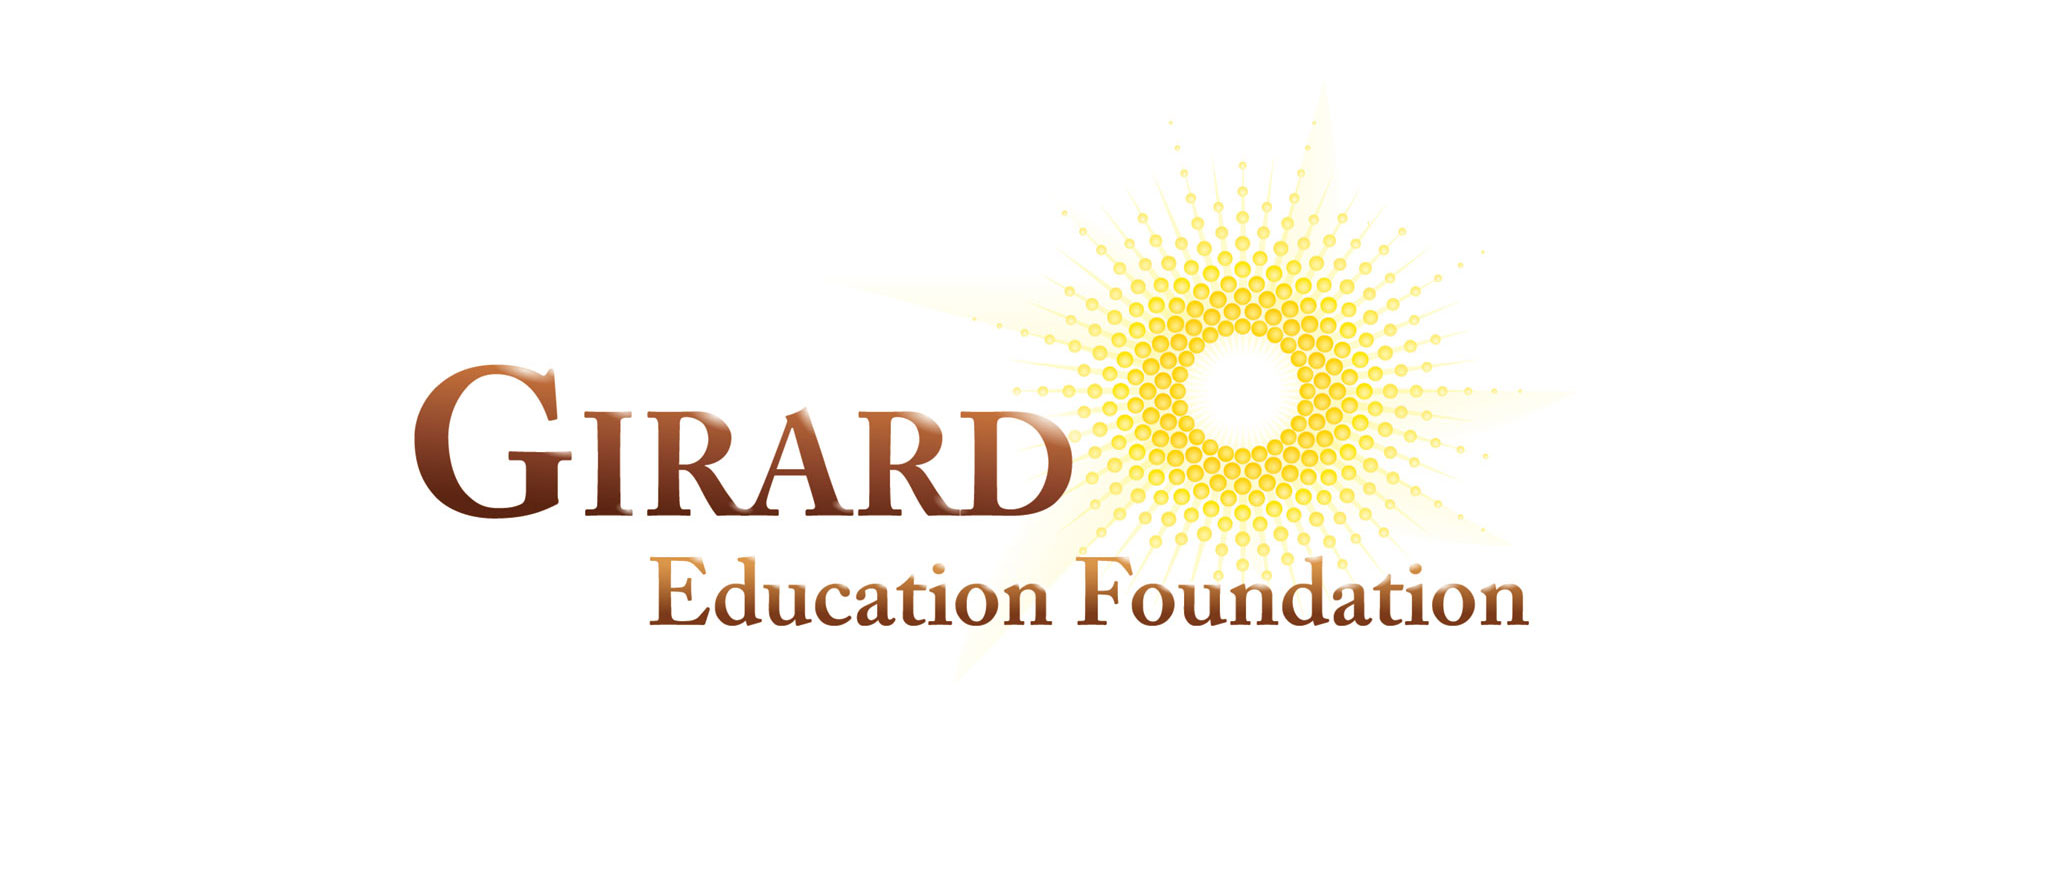 Girard Education Foundation logo design by Ashley Lewis